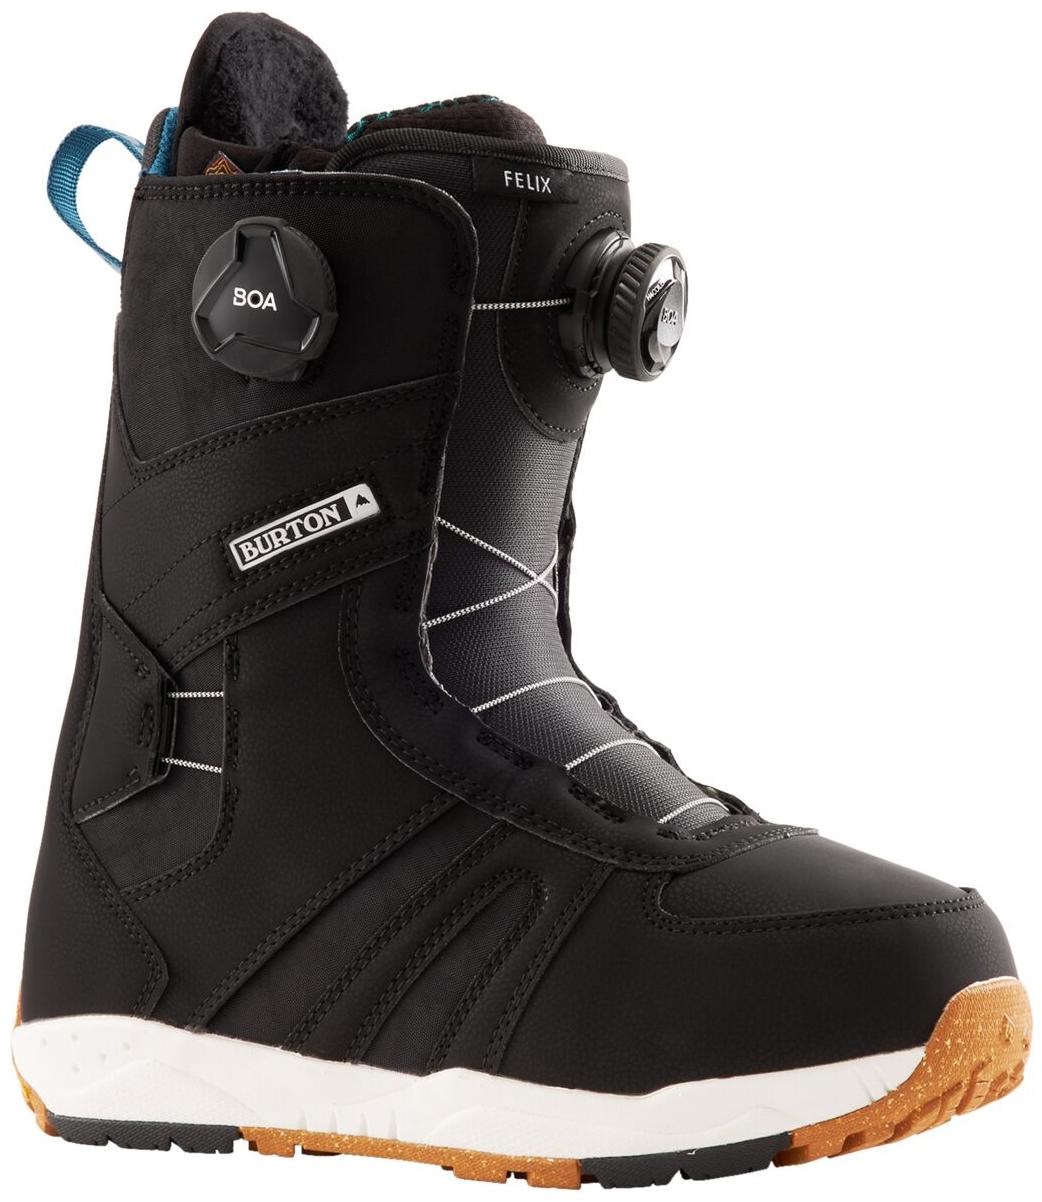 фото Ботинки для сноуборда burton felix boa 2021/2022, black, 25 см